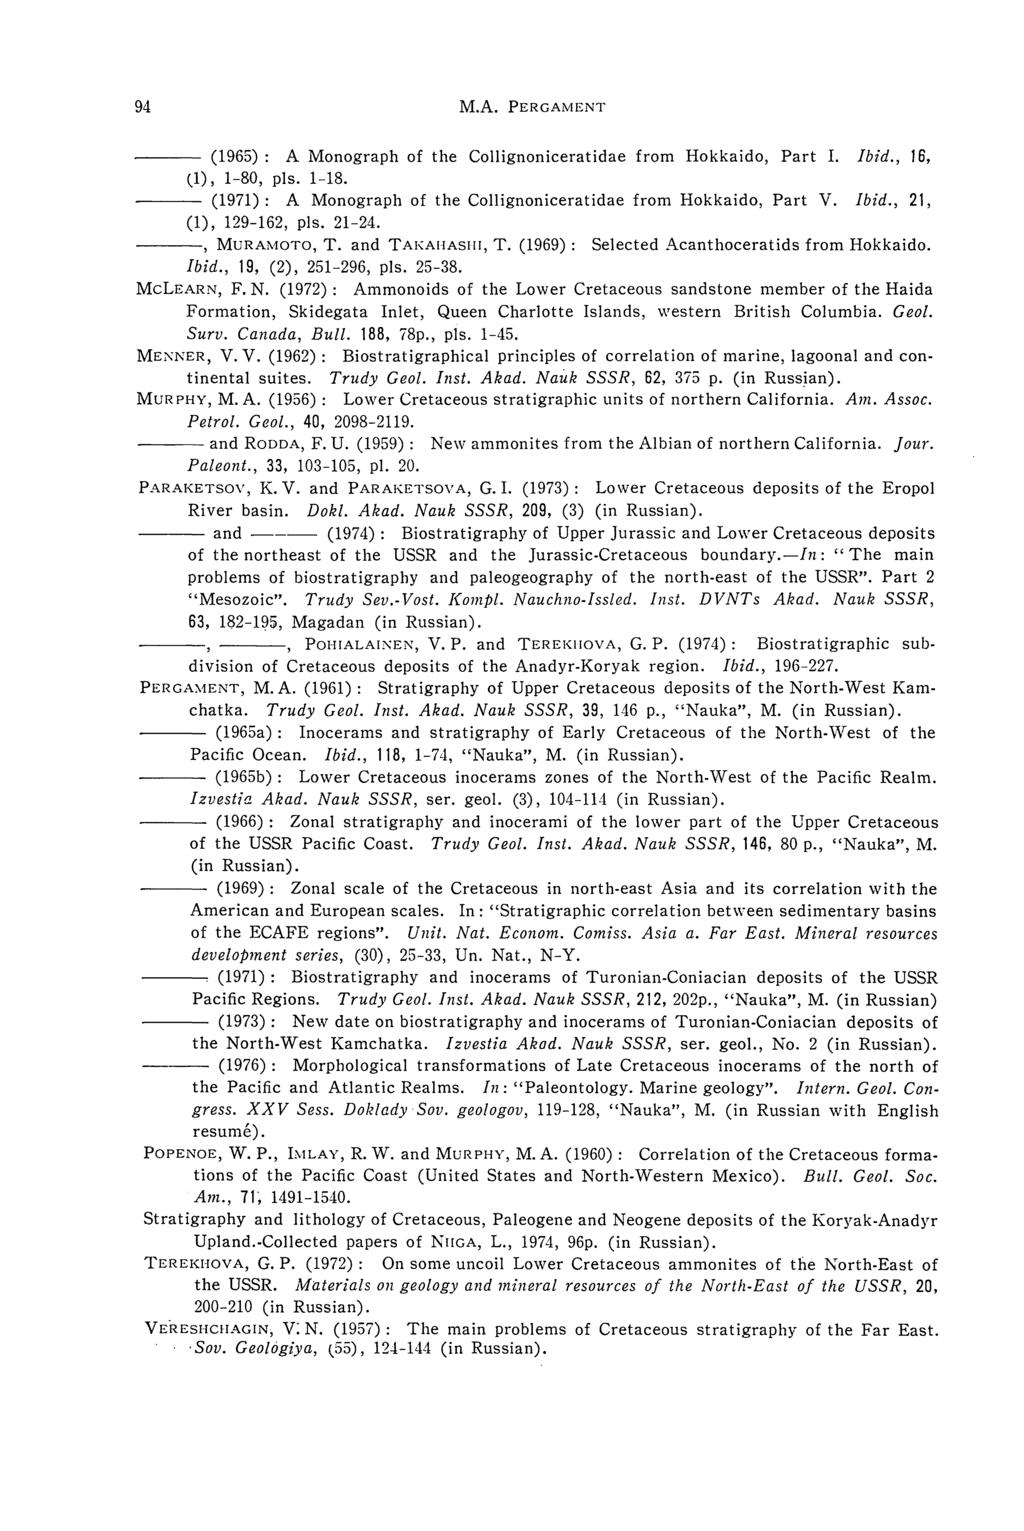 94 M.A. PERGAMENT --- (1965); A Monograph of the ColJignoniceratidae from Hokkaido, Part I. Ibid., 16, (1), 1-80, pis. 1-18. (1971); A Monograph of the ColJignoniceratidae from Hokkaido, Part V. Ibid., 21, (1), 129-162, pis.